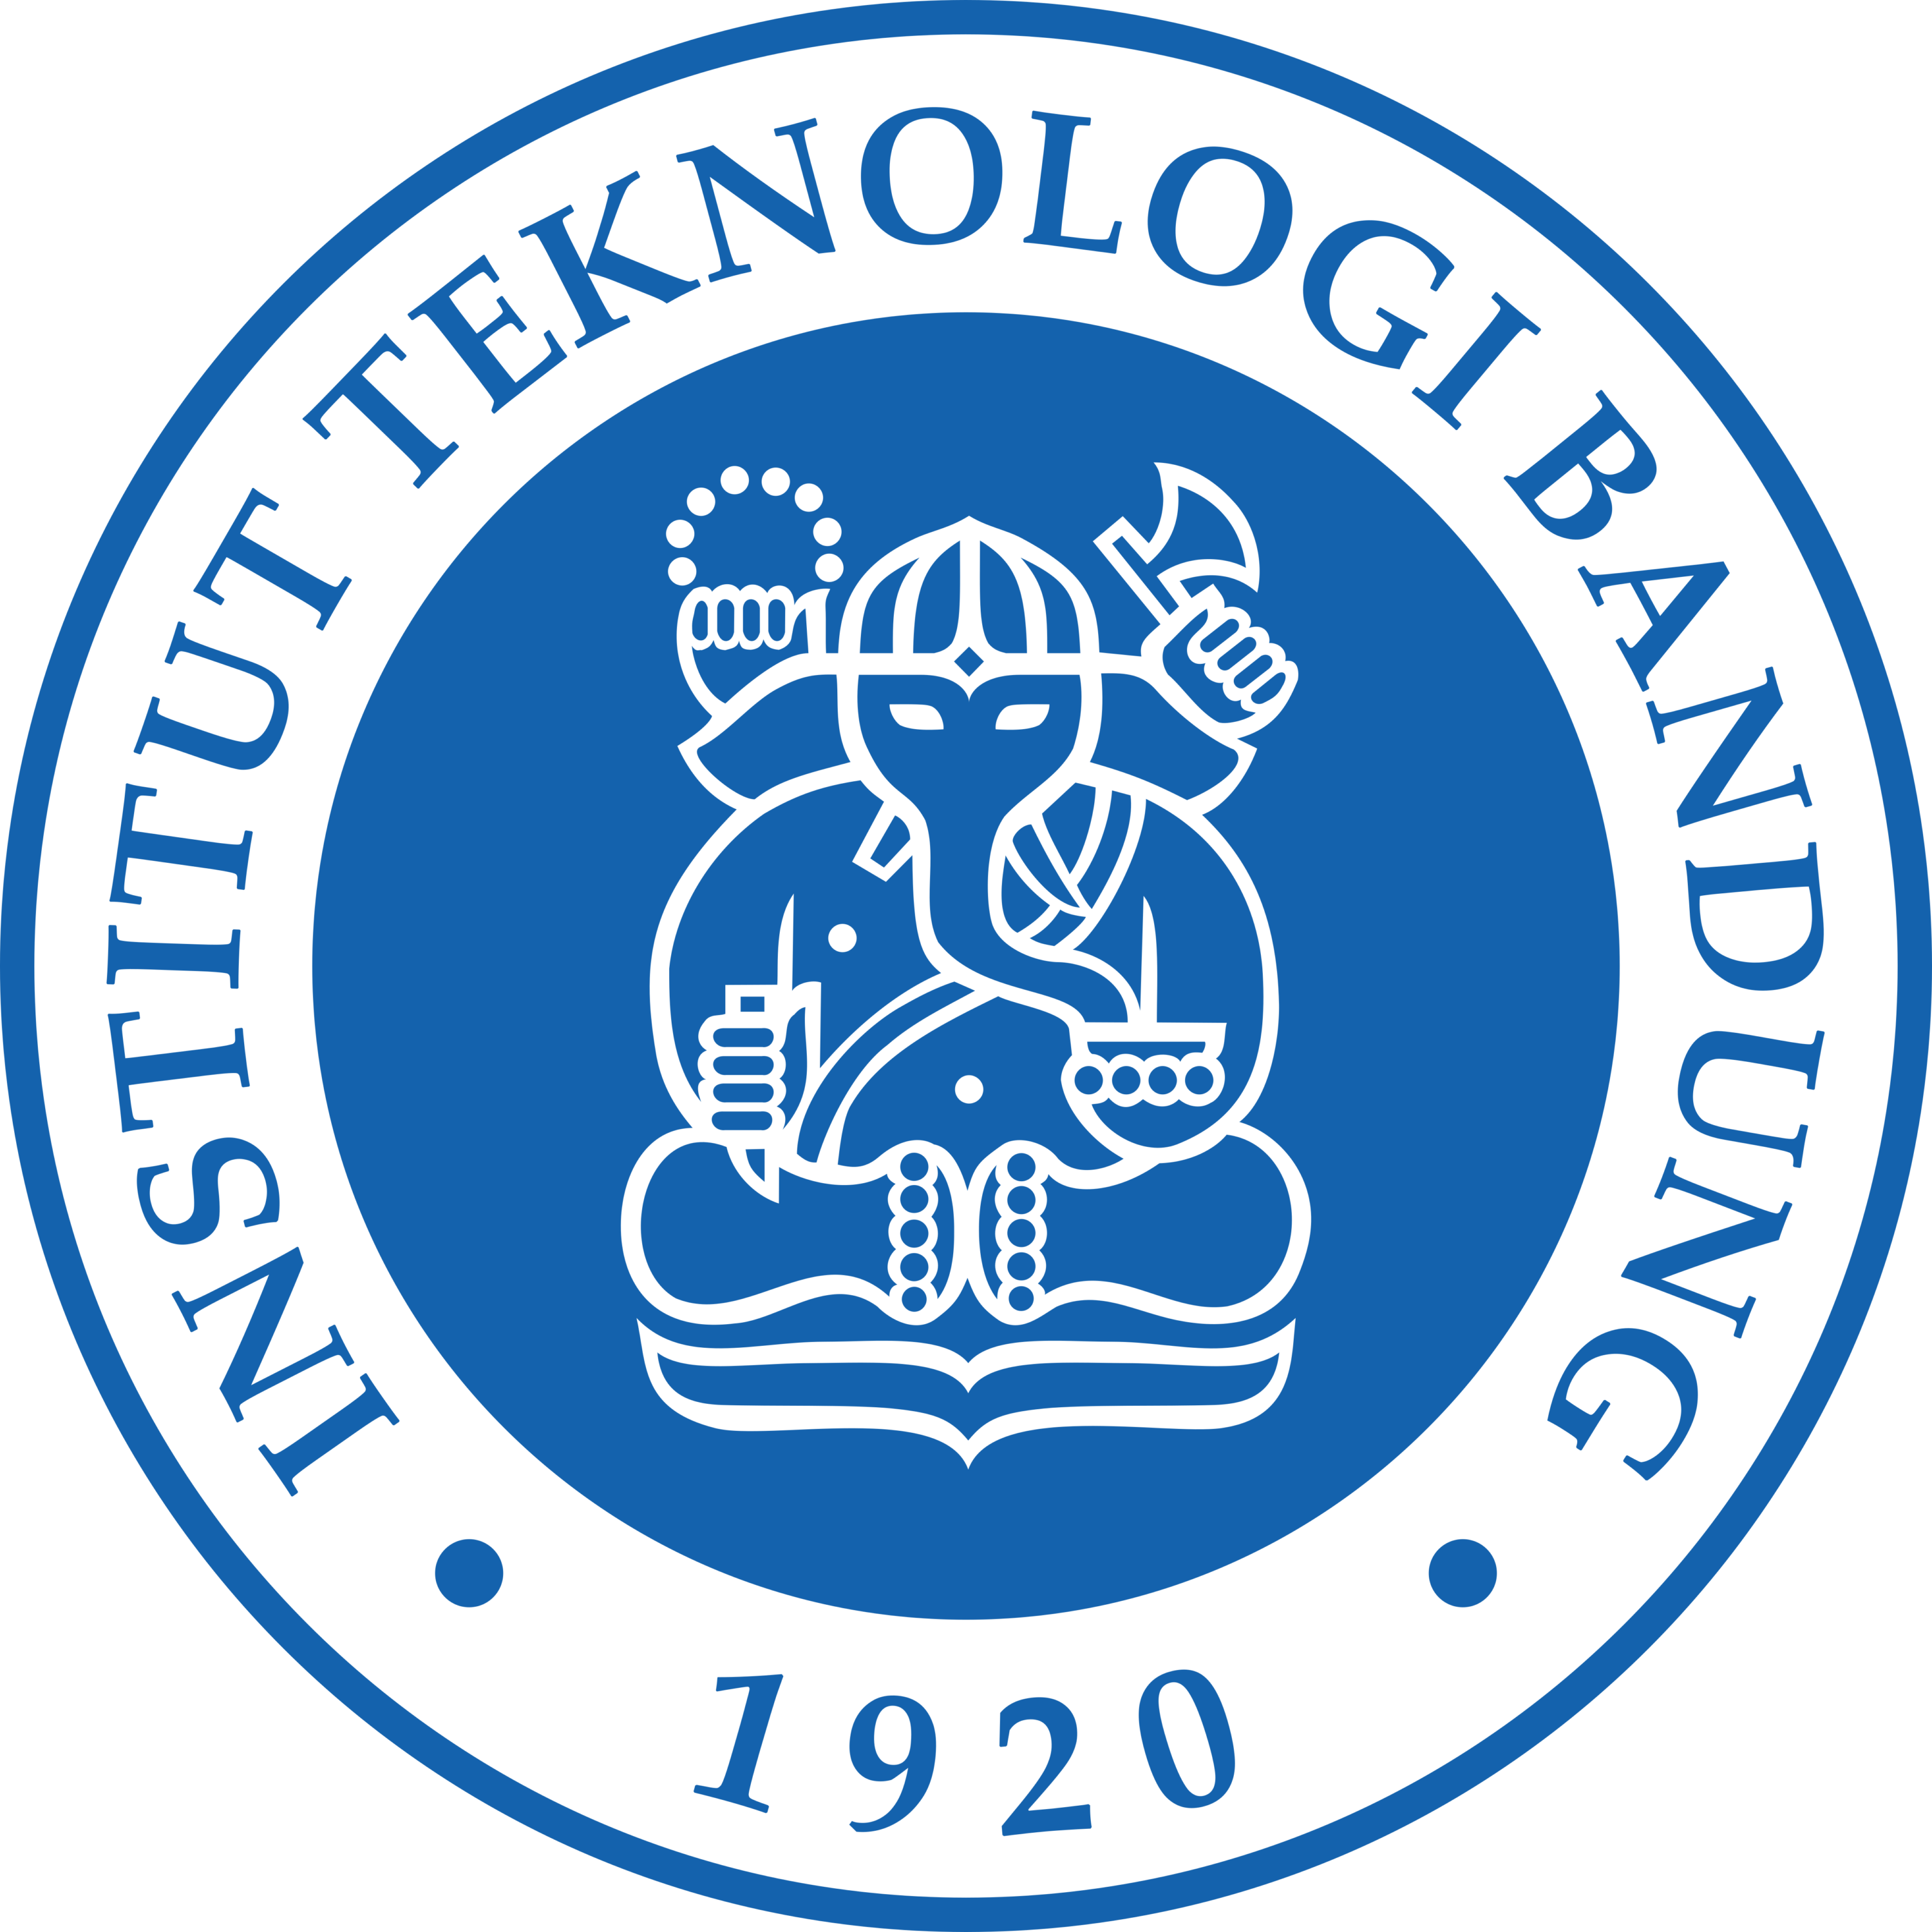 Institut Teknologi Bandung Logo